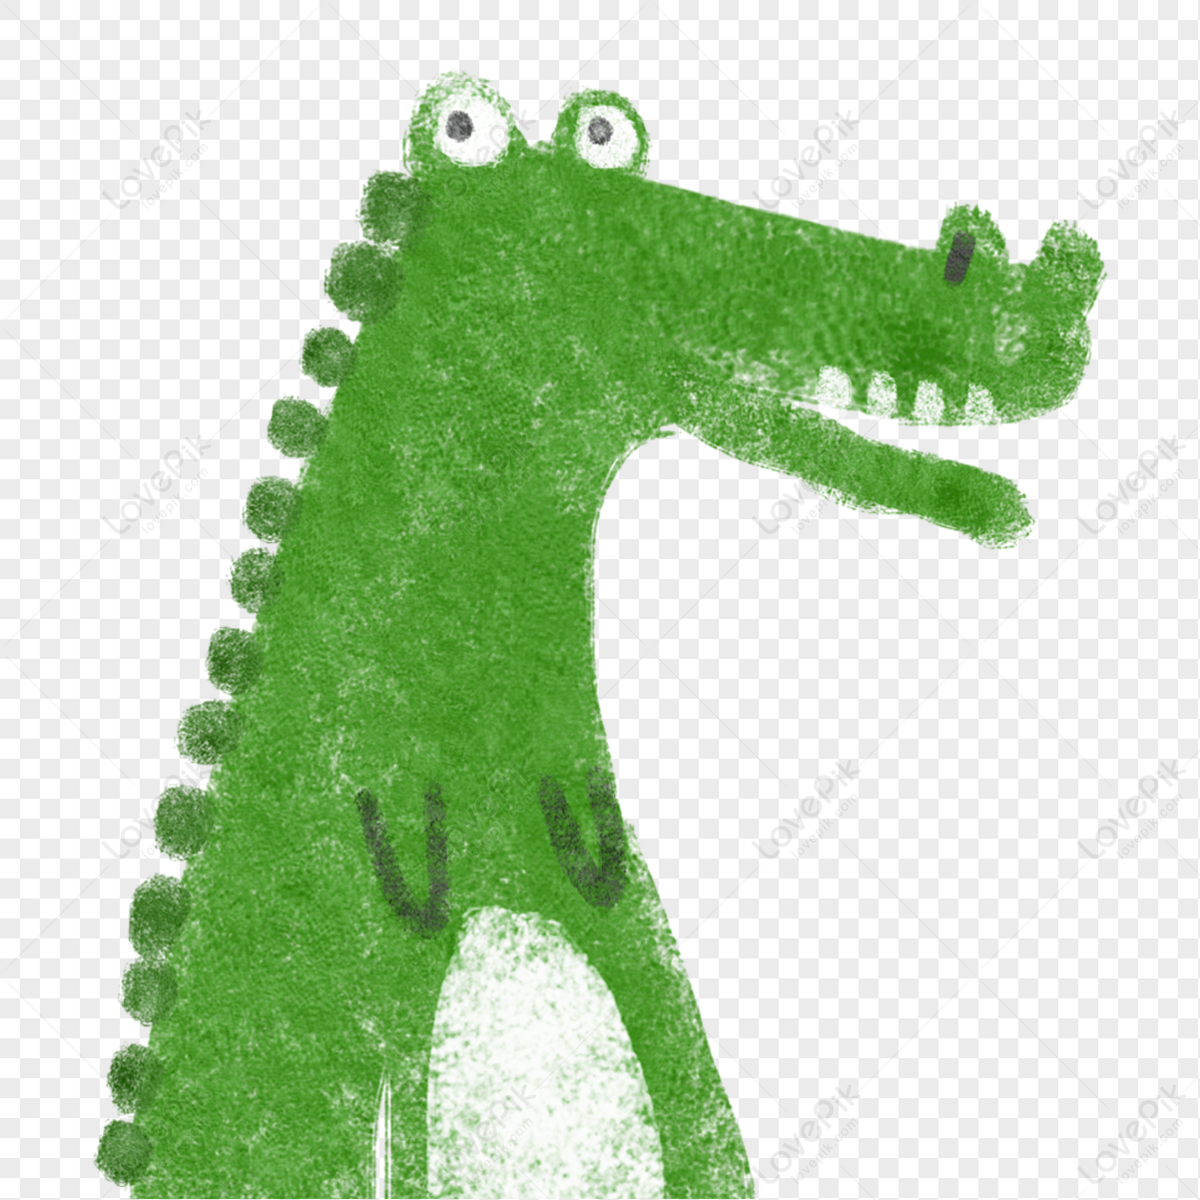 Premium Vector | Cute crocodile cartoon characters vector illustration for  kids coloring book